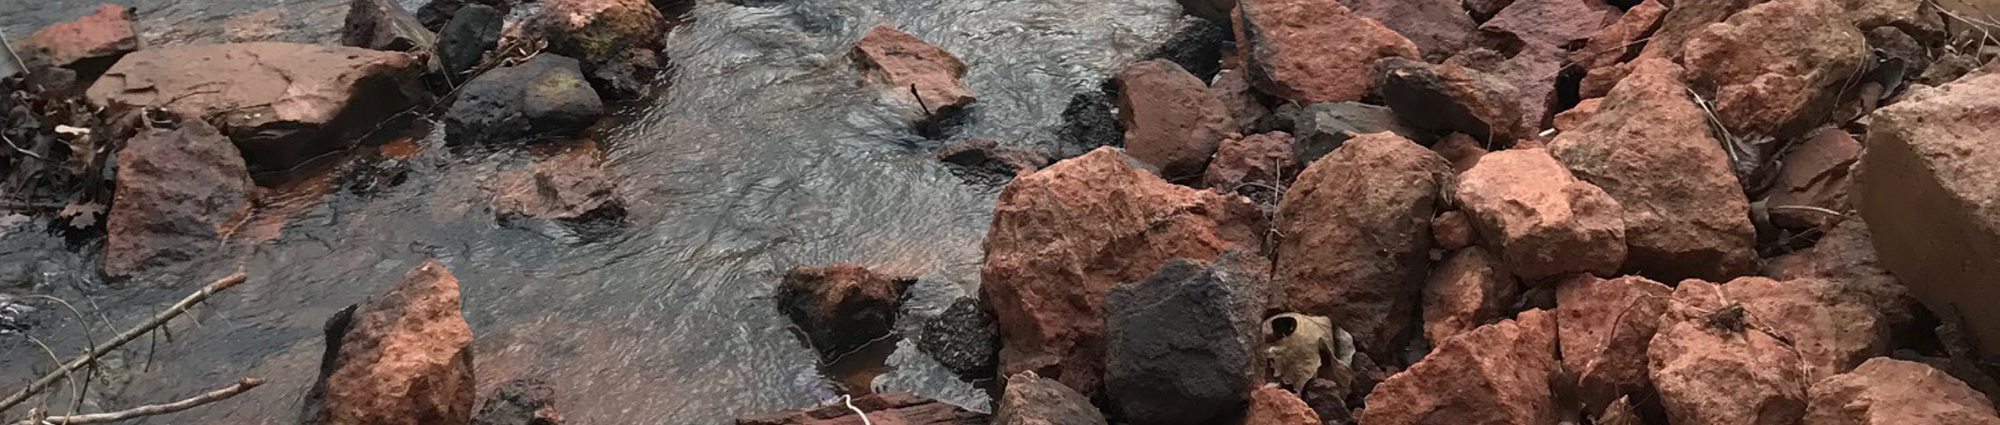  Water running over rocks.